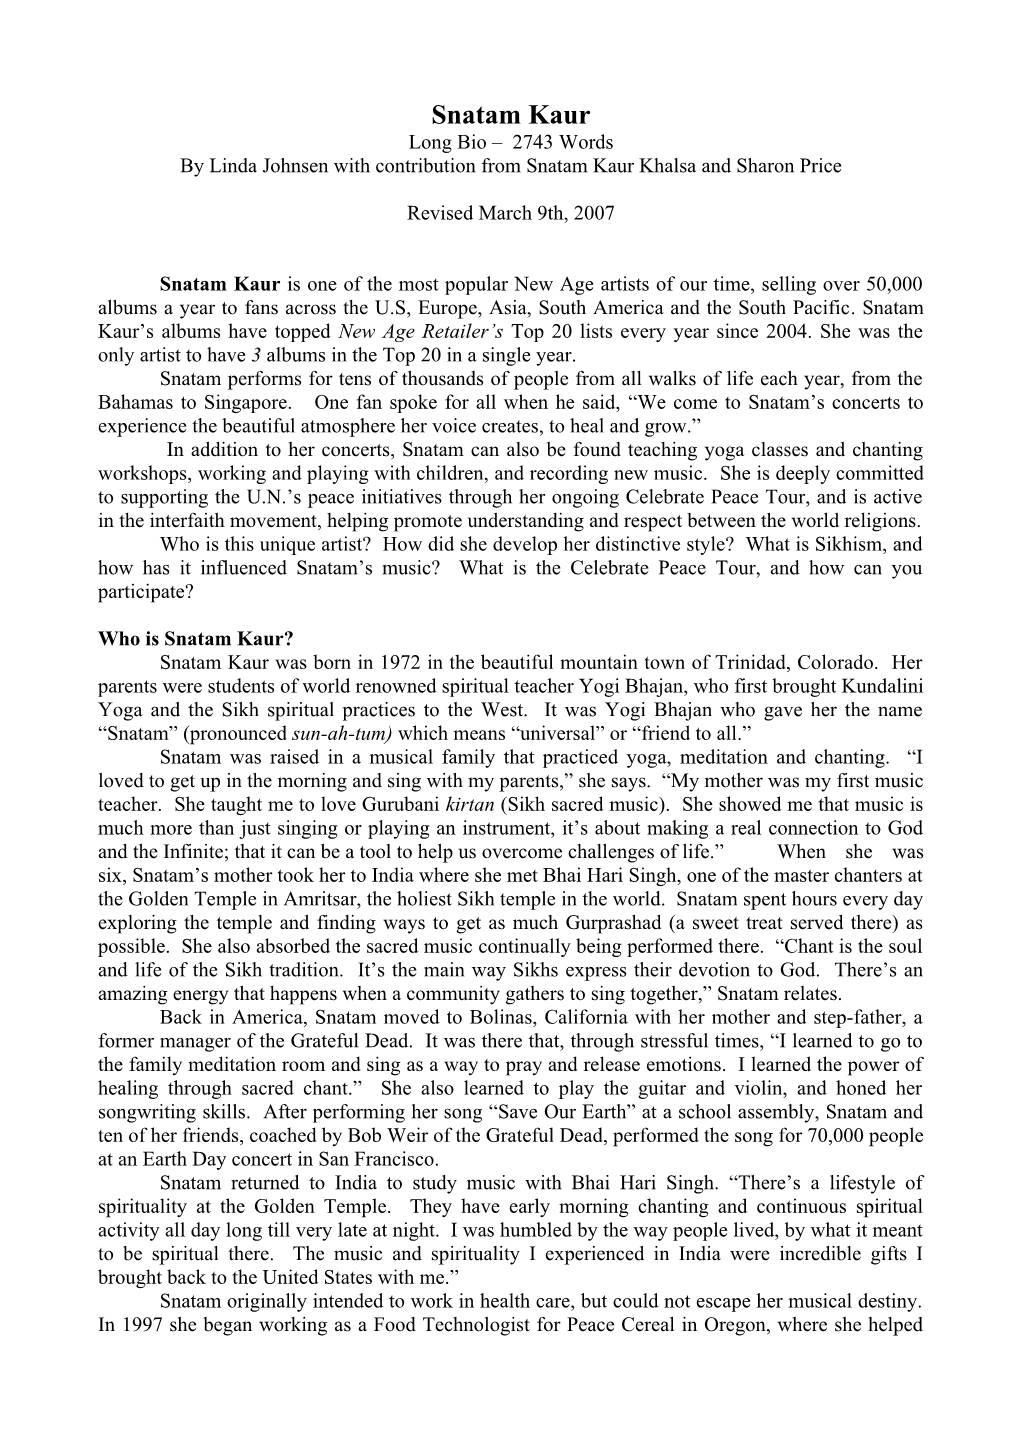 Snatam Kaur Long Bio 2743 Words by Linda Johnsen with Contribution from Snatam Kaur Khalsa